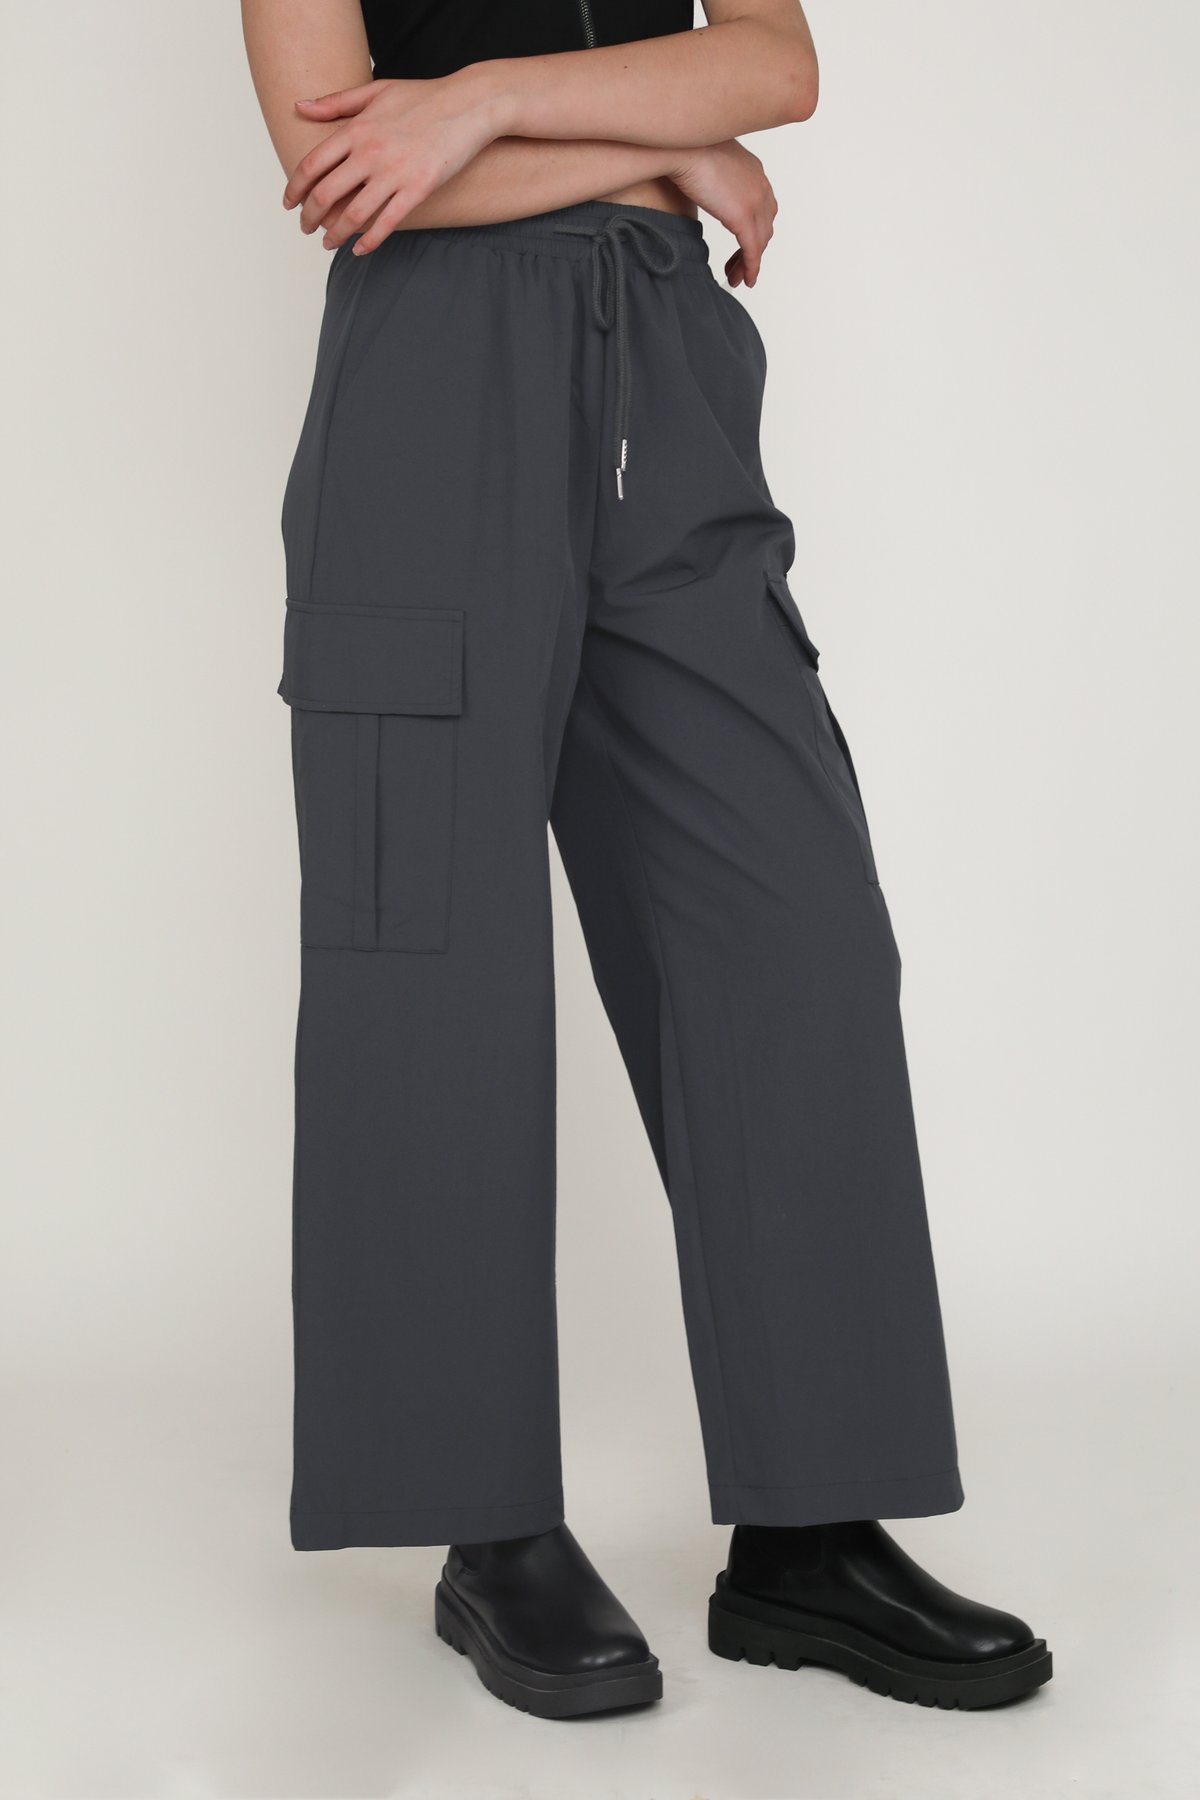 Regina Nylon Cargo Pants (Dark Grey)